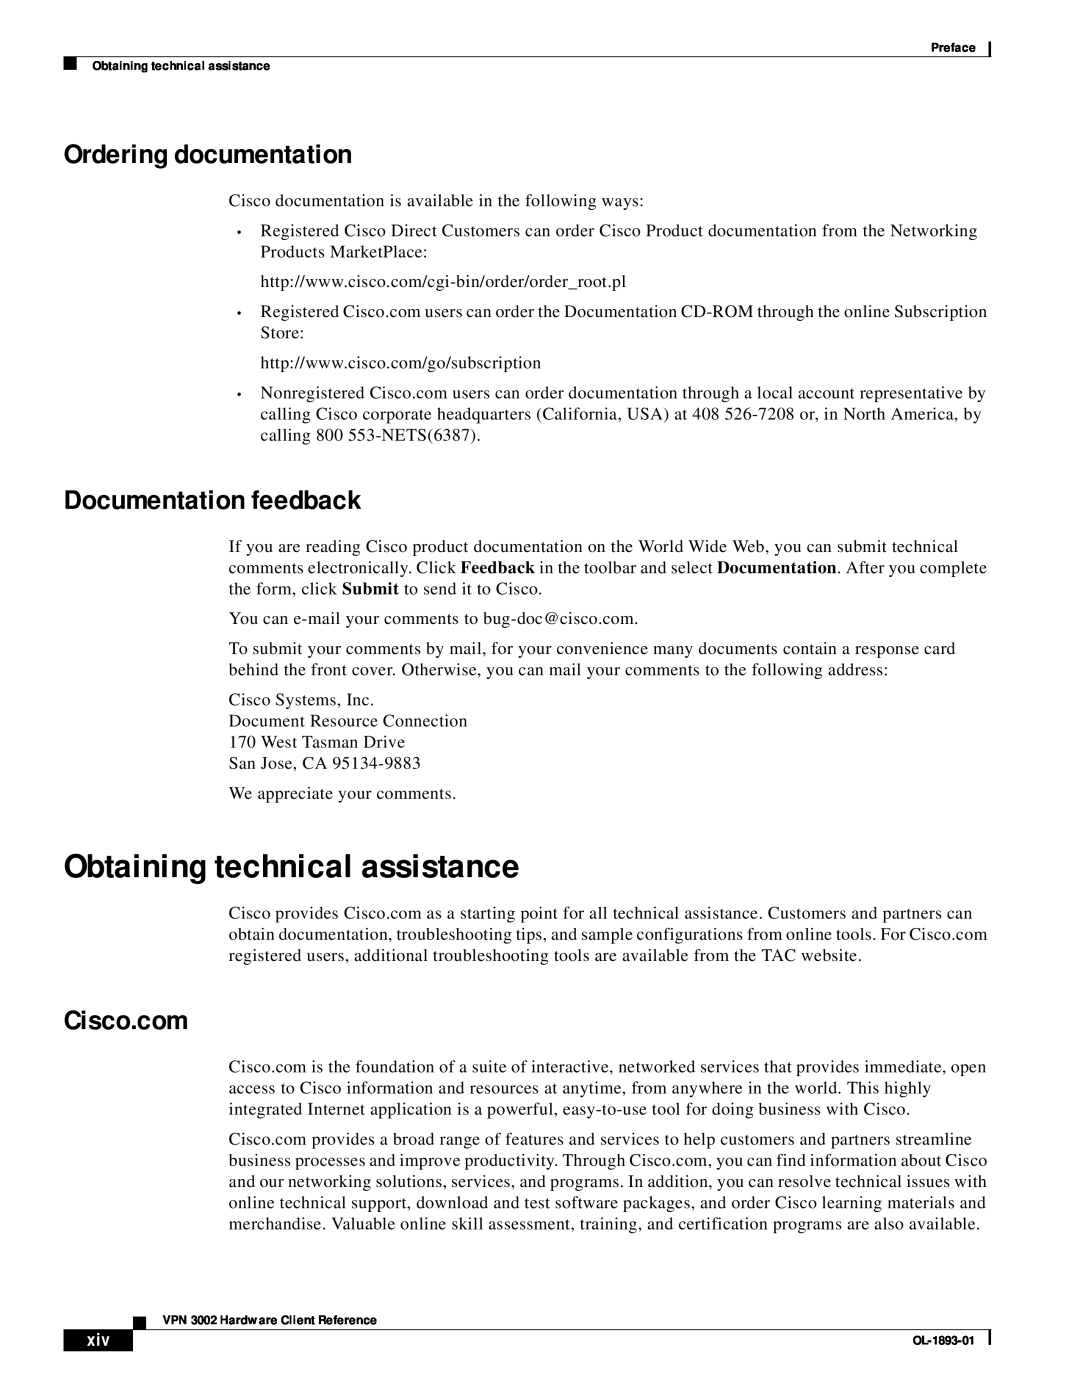 Cisco Systems VPN 3002 manual Obtaining technical assistance, Ordering documentation, Documentation feedback, Cisco.com 